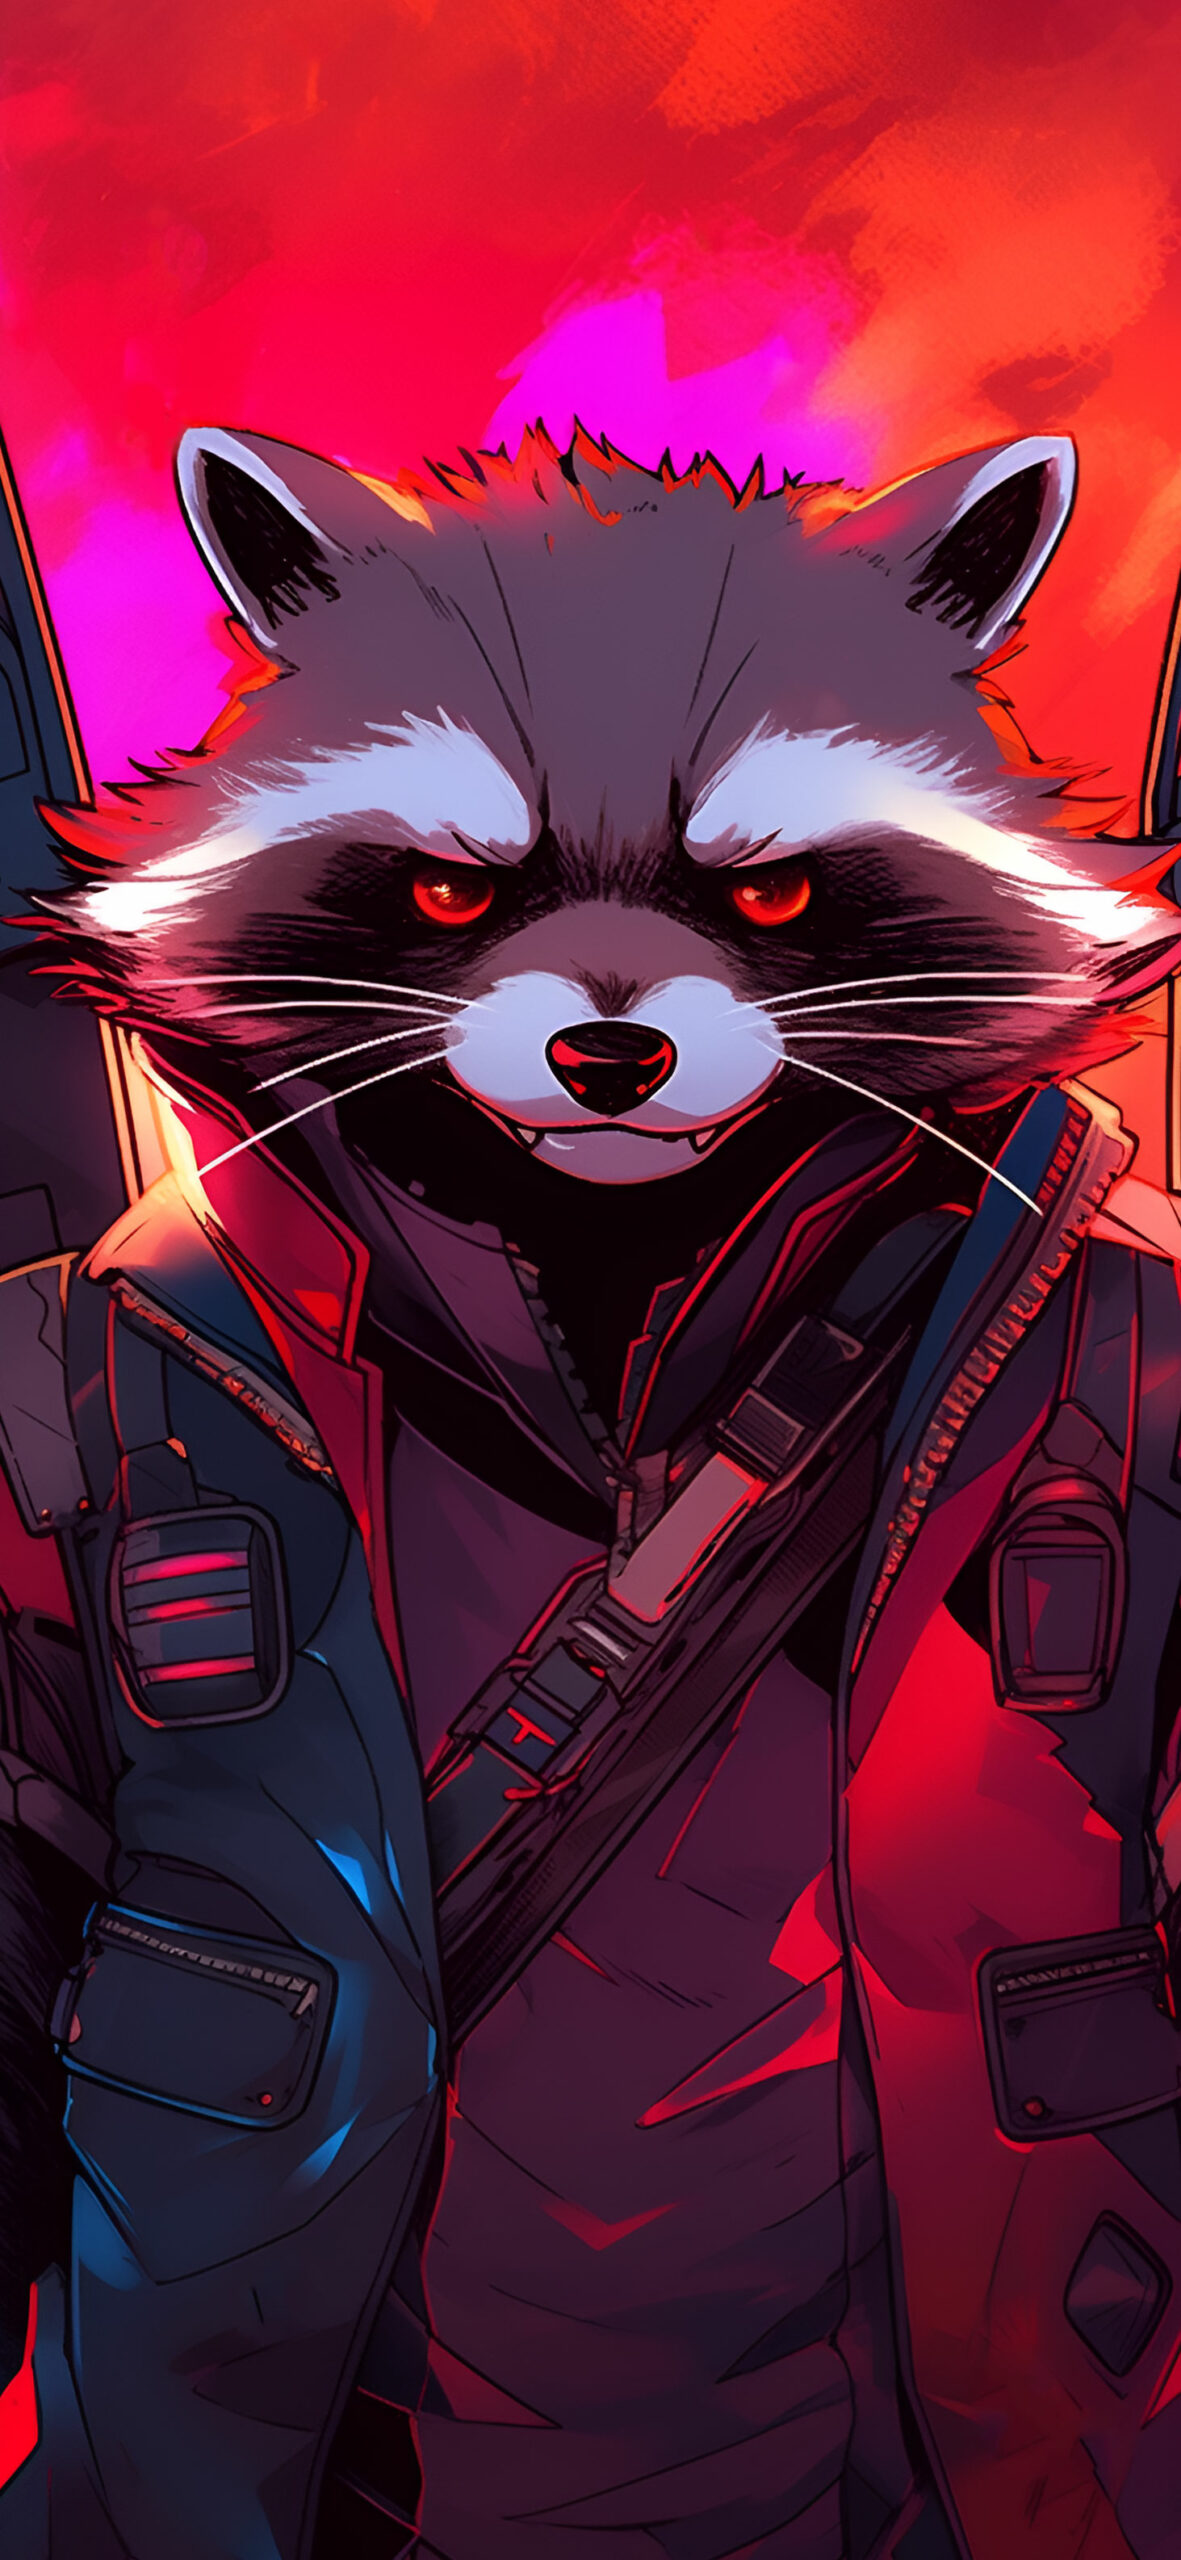 Guardians of the galaxy rocket raccoon cool wallpaper Marvel a